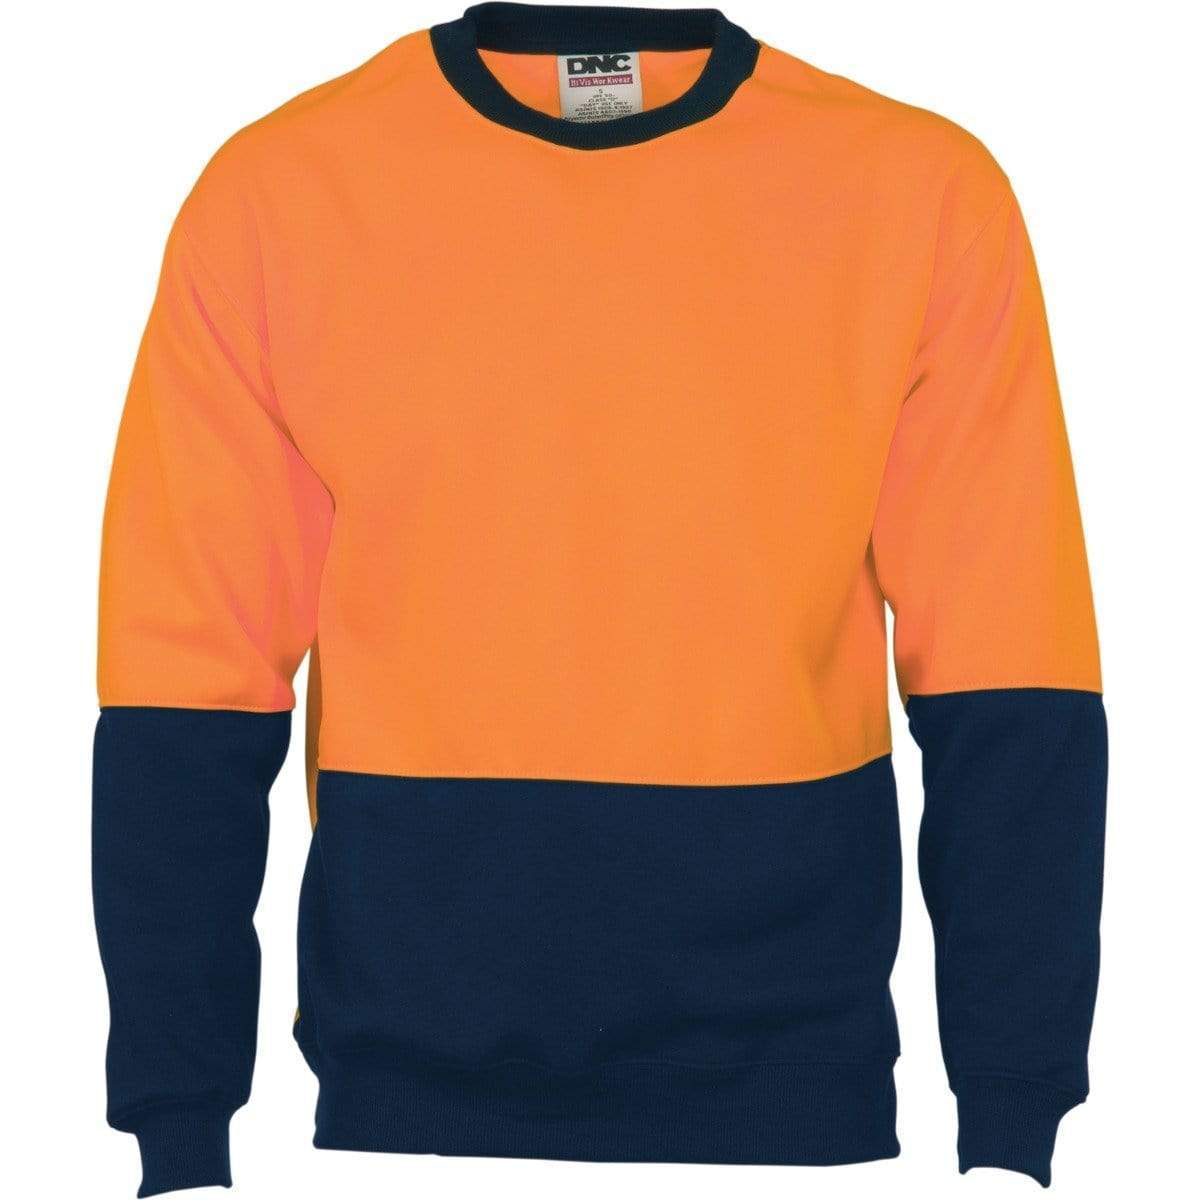 DNC Workwear Work Wear Orange/Navy / XS DNC WORKWEAR Hi-Vis Two-Tone Fleecy Crew-Neck Sweatshirt (Sloppy Joe) 3821